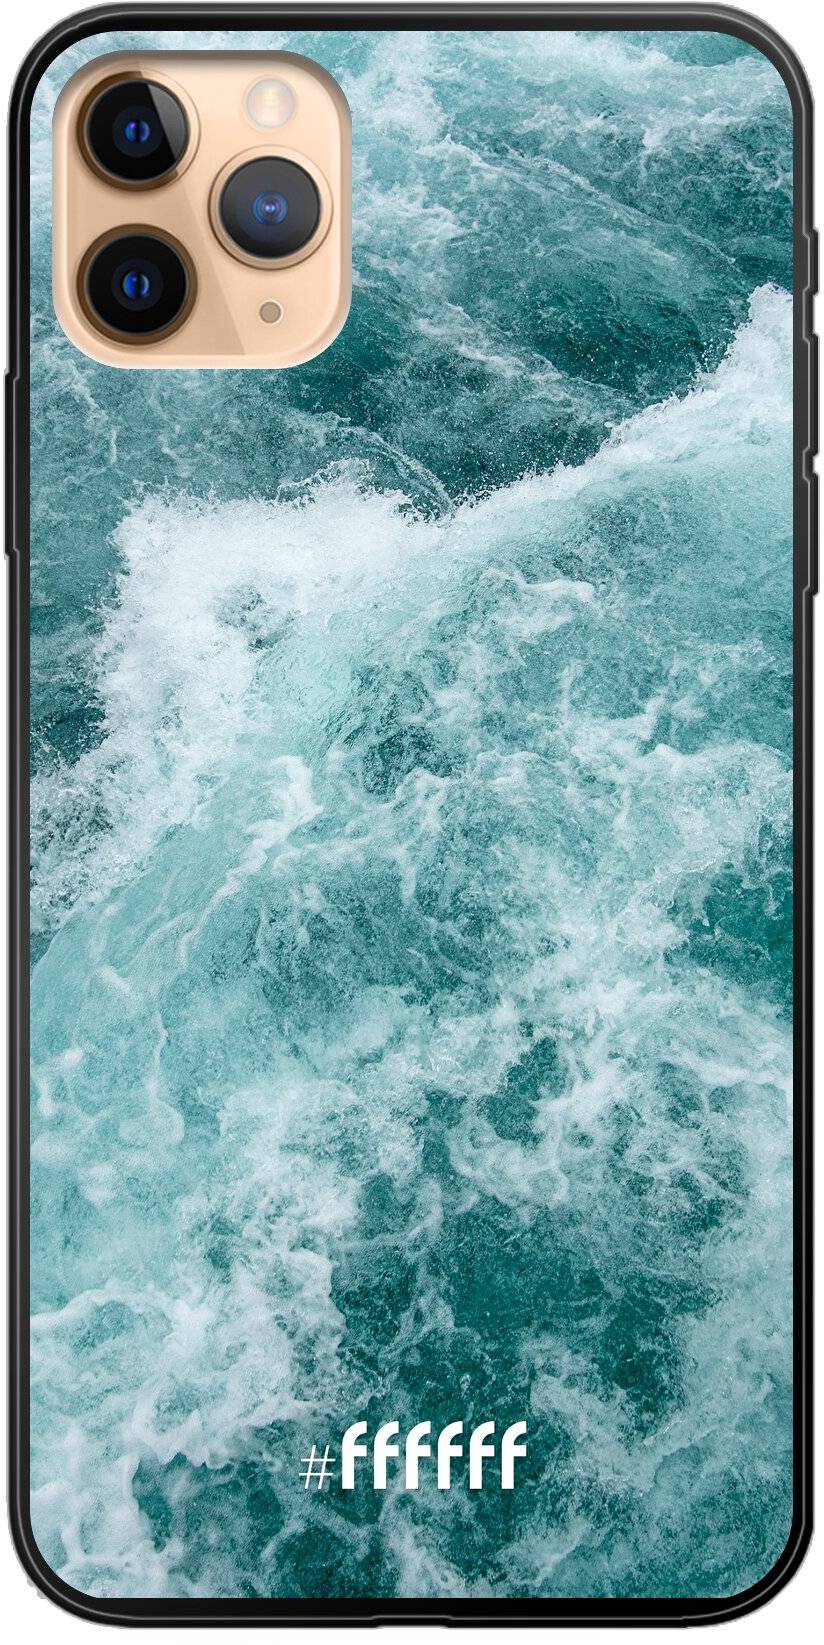 Whitecap Waves iPhone 11 Pro Max